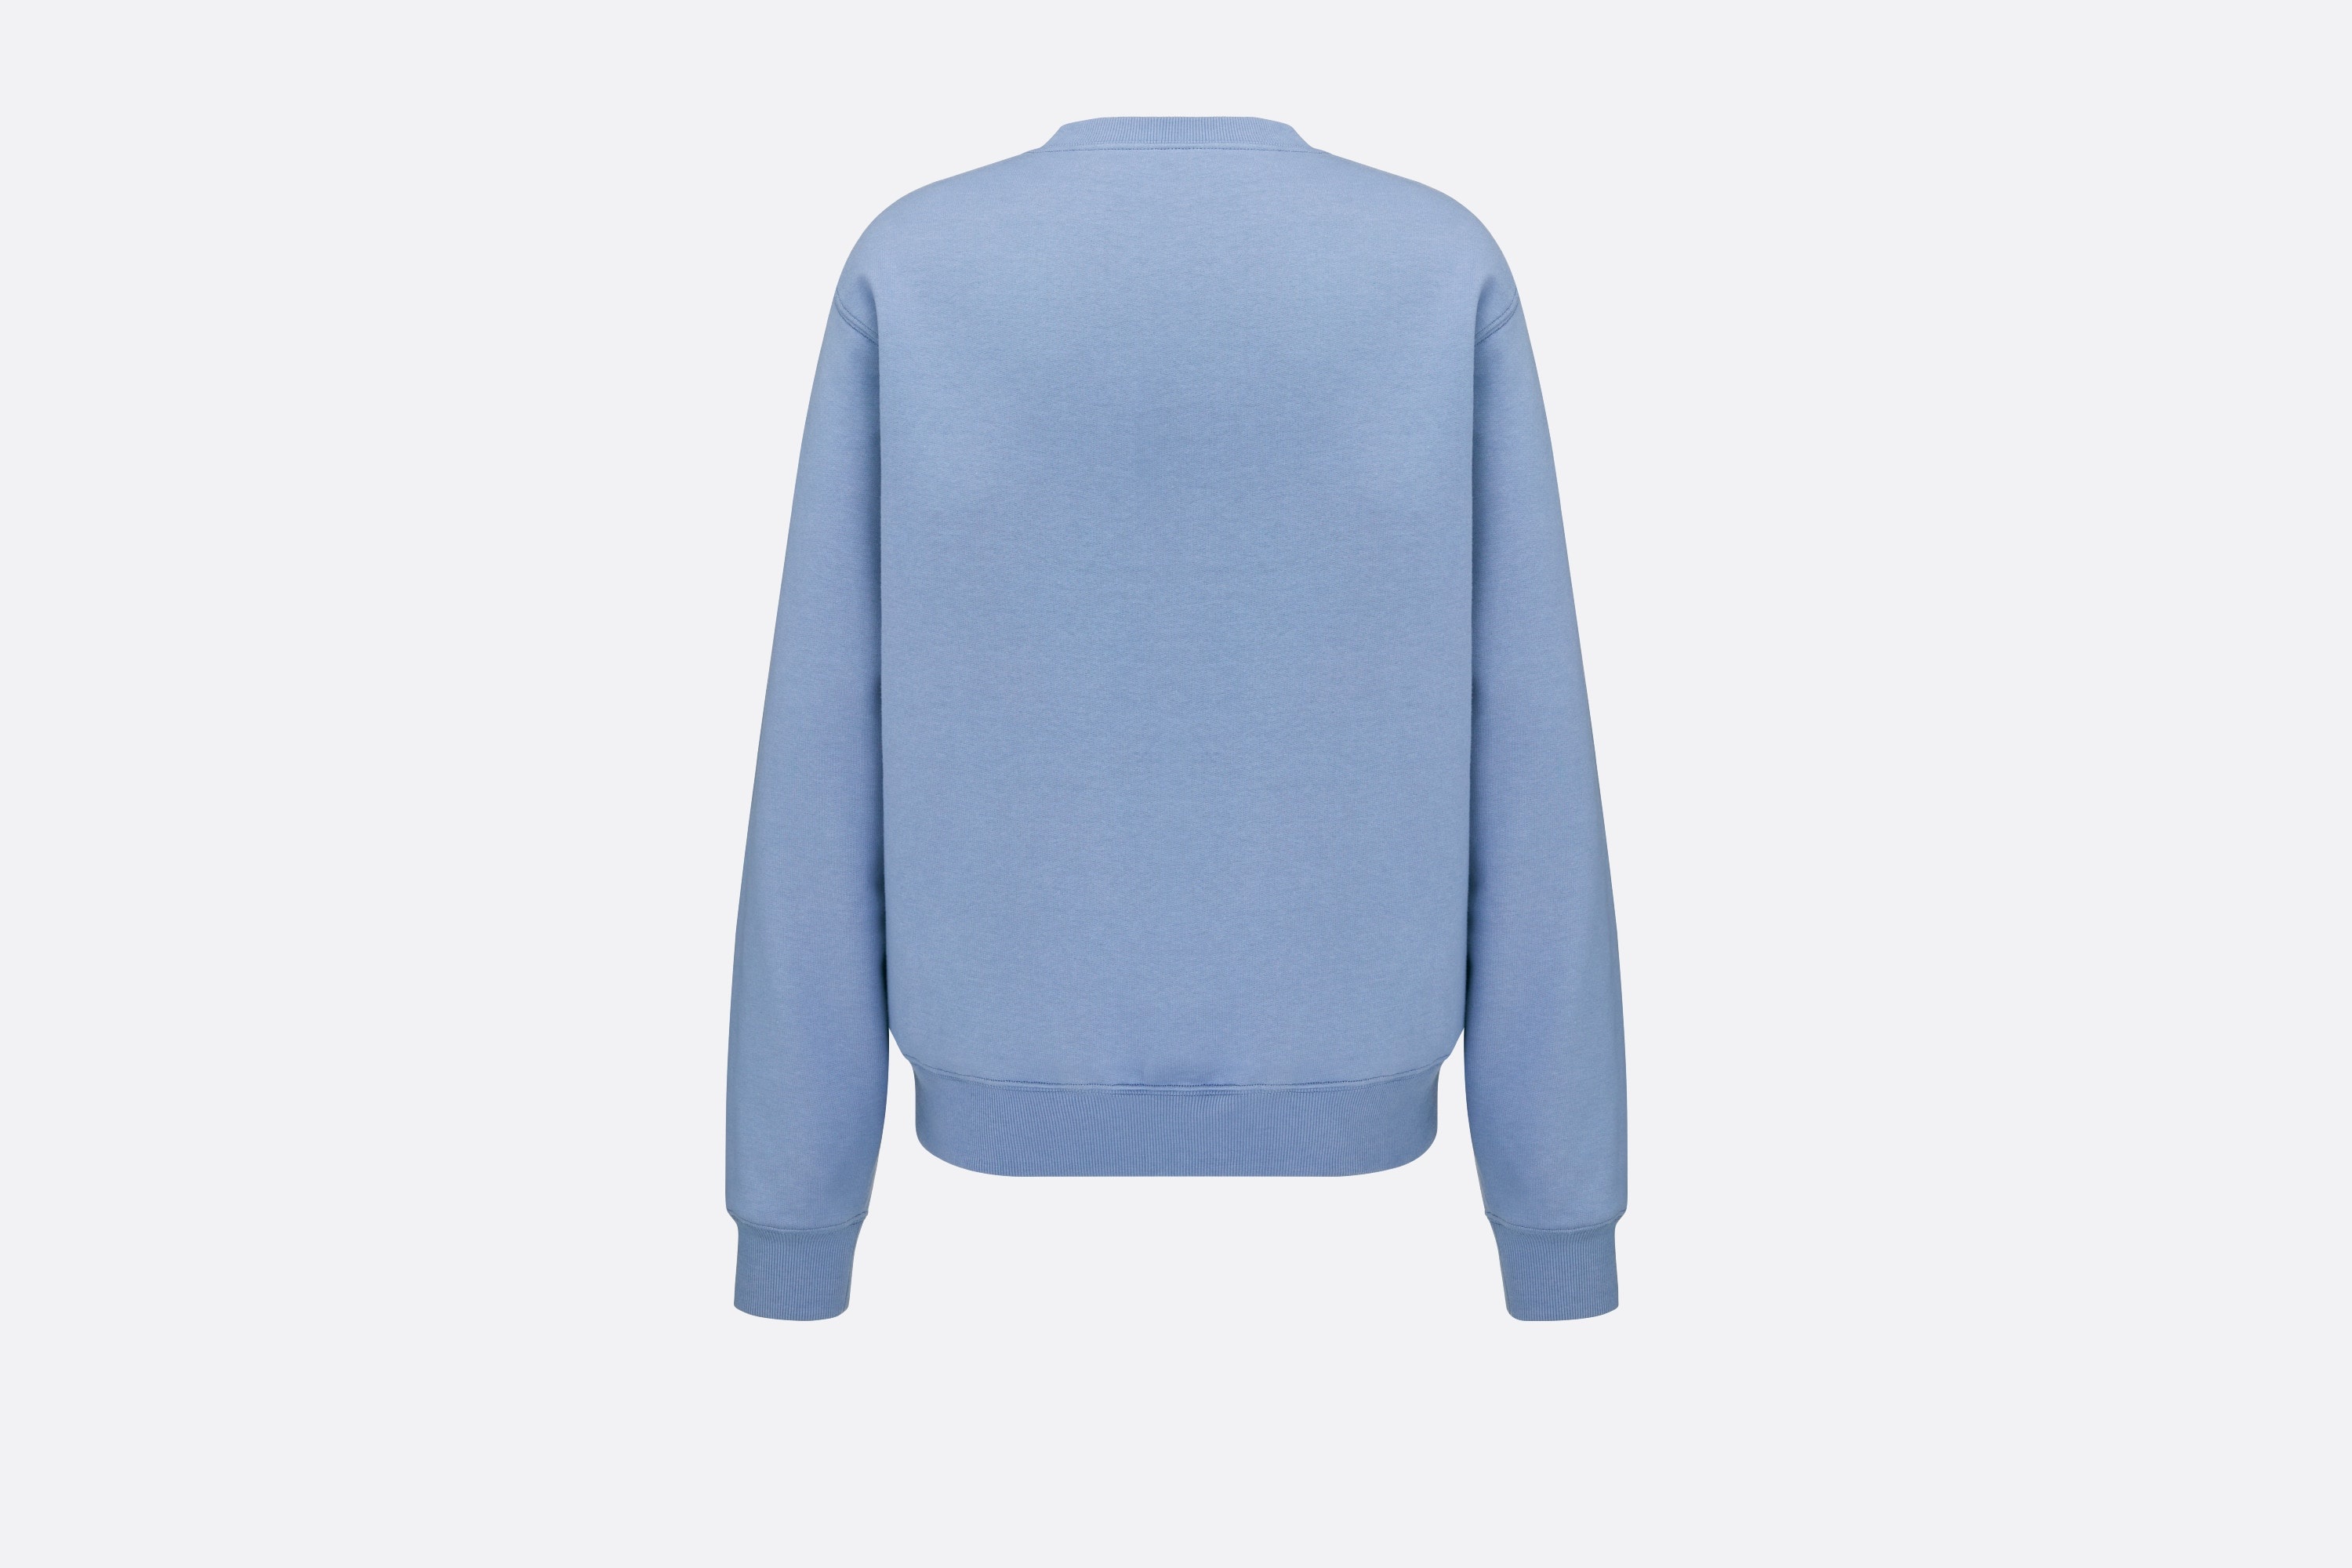 Christian Dior Couture Sweatshirt - 2